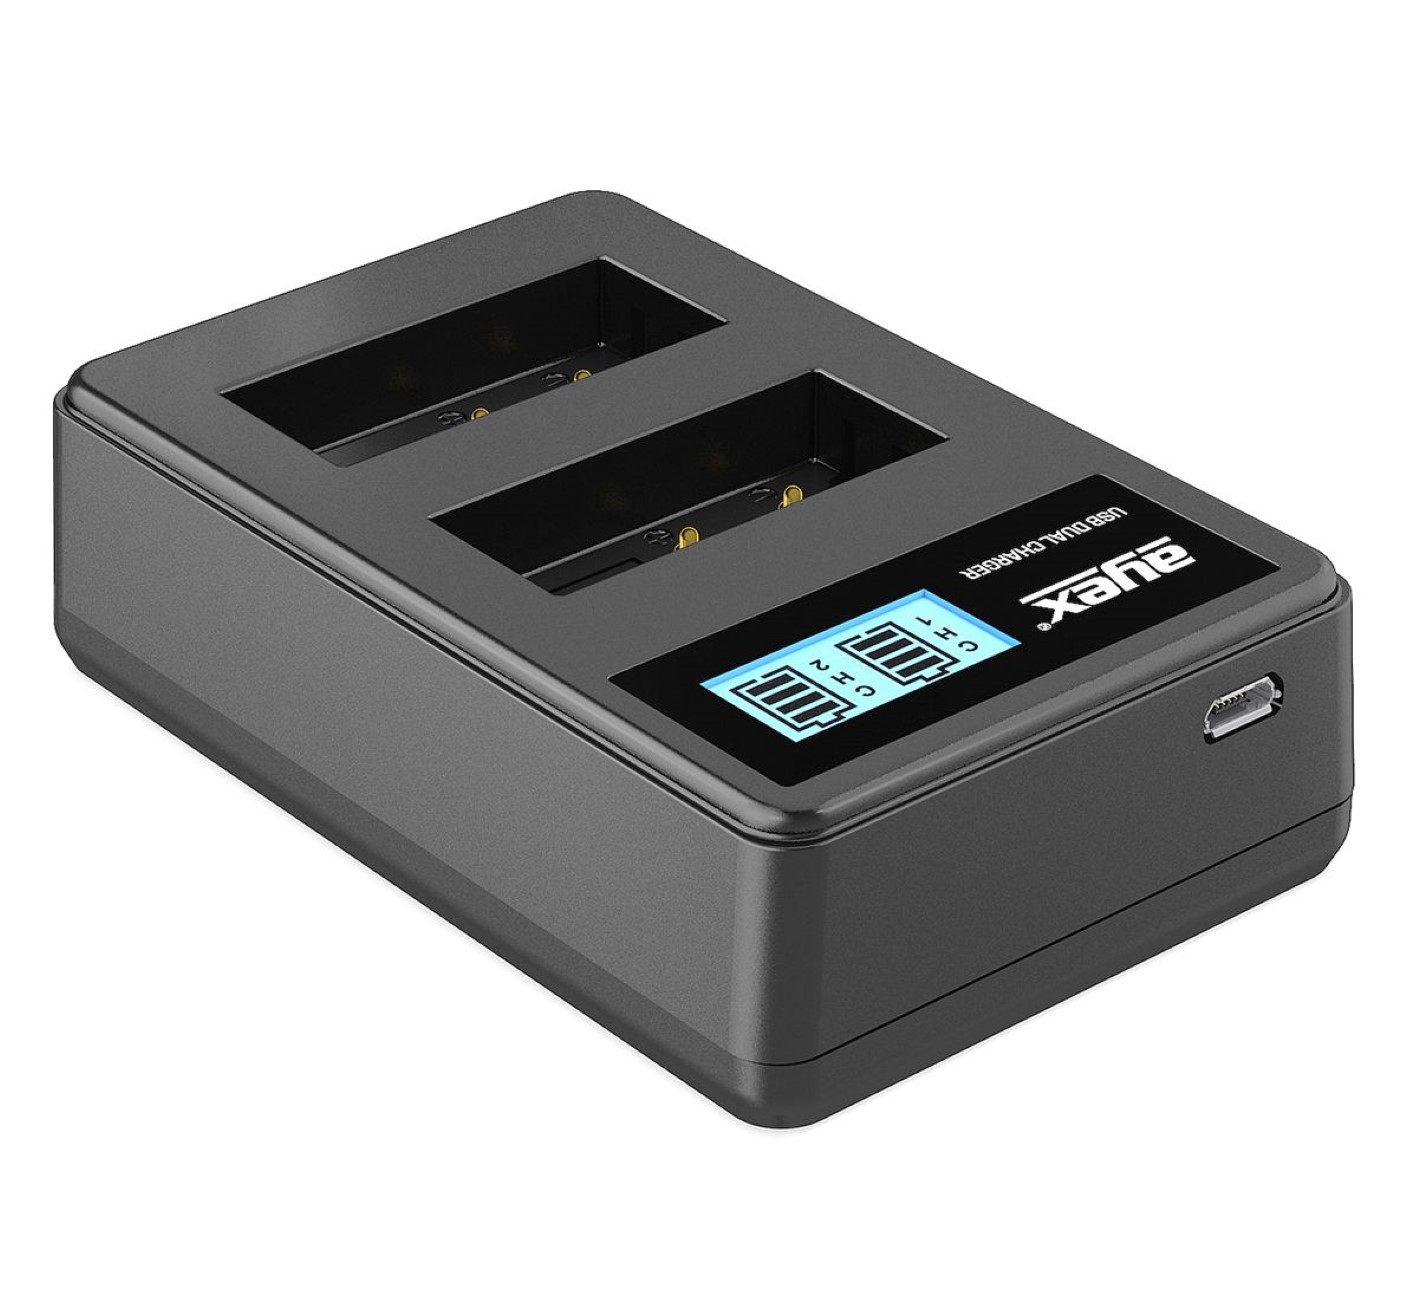 ayex Power Set mit 2x LP-E17 Akku + 1x USB Dual Ladegerät für zB 800D 760D 200D 77D M6